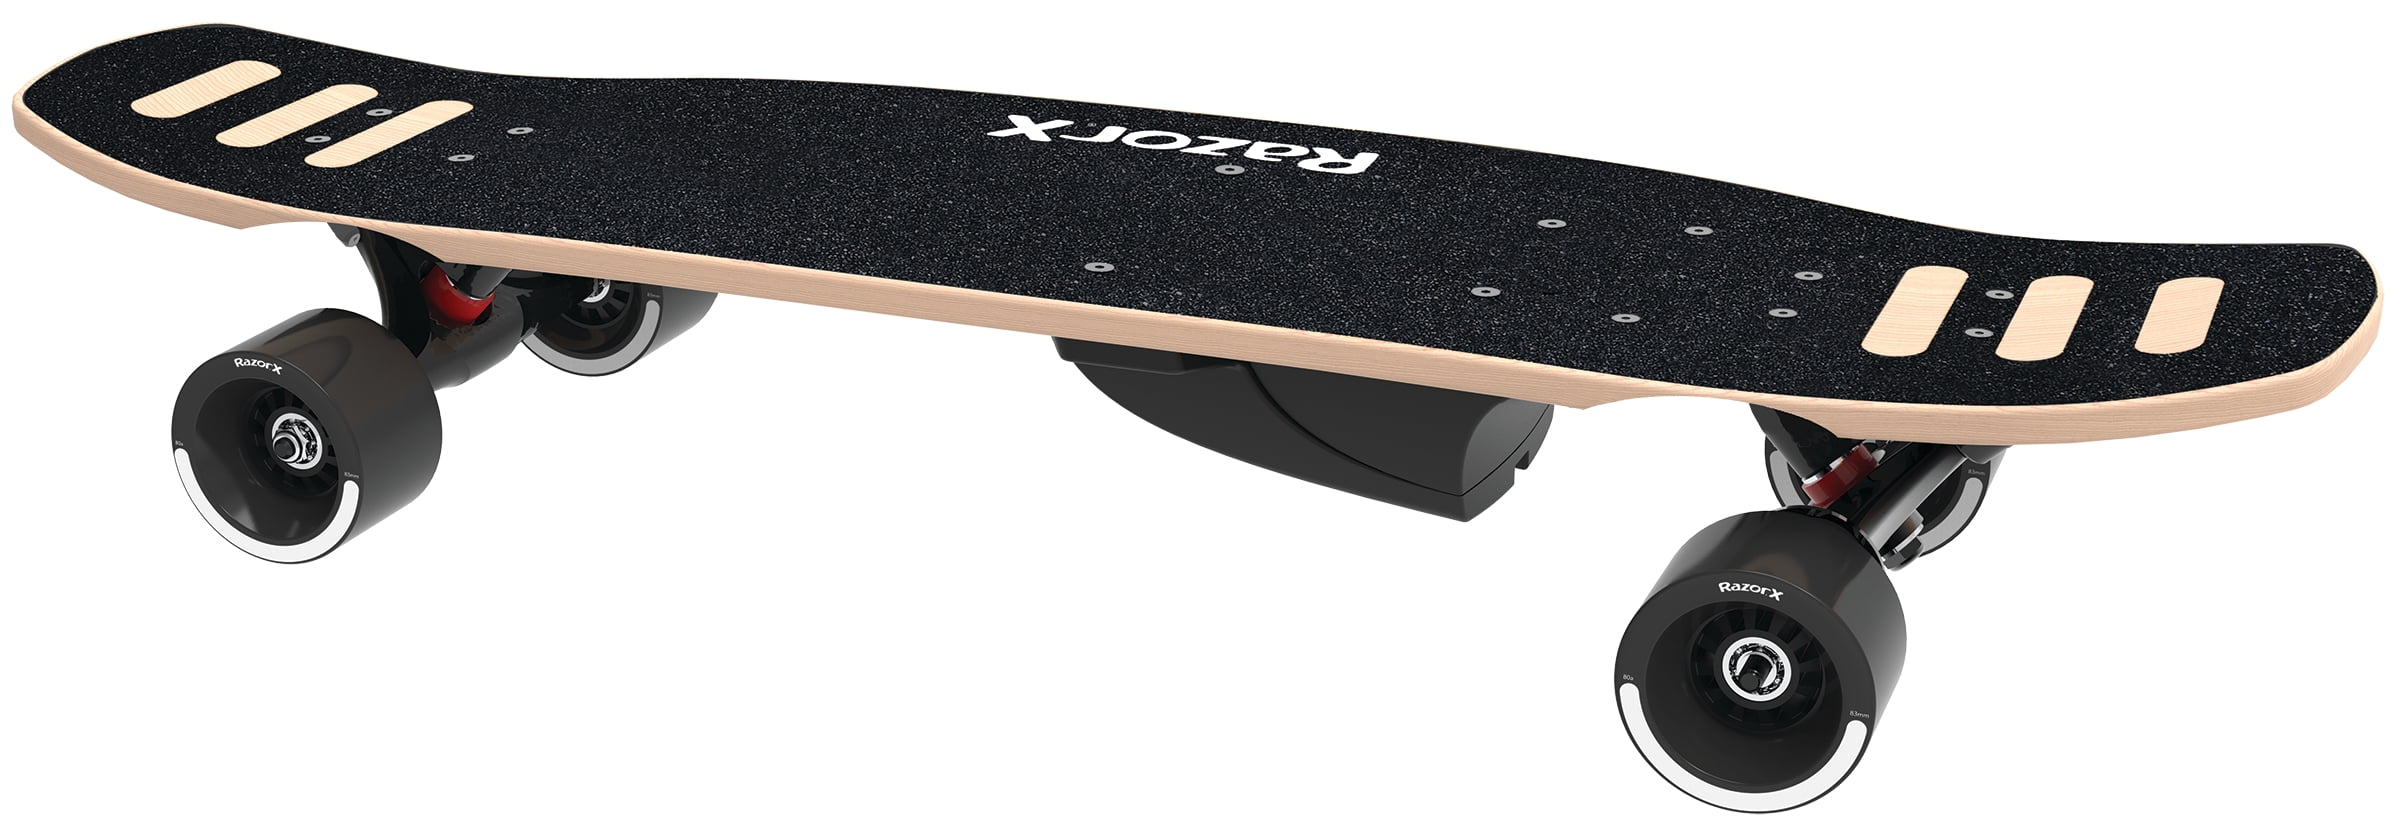 RazorX DLX Electric Skateboard Black- Silent Motor, Maple Deck